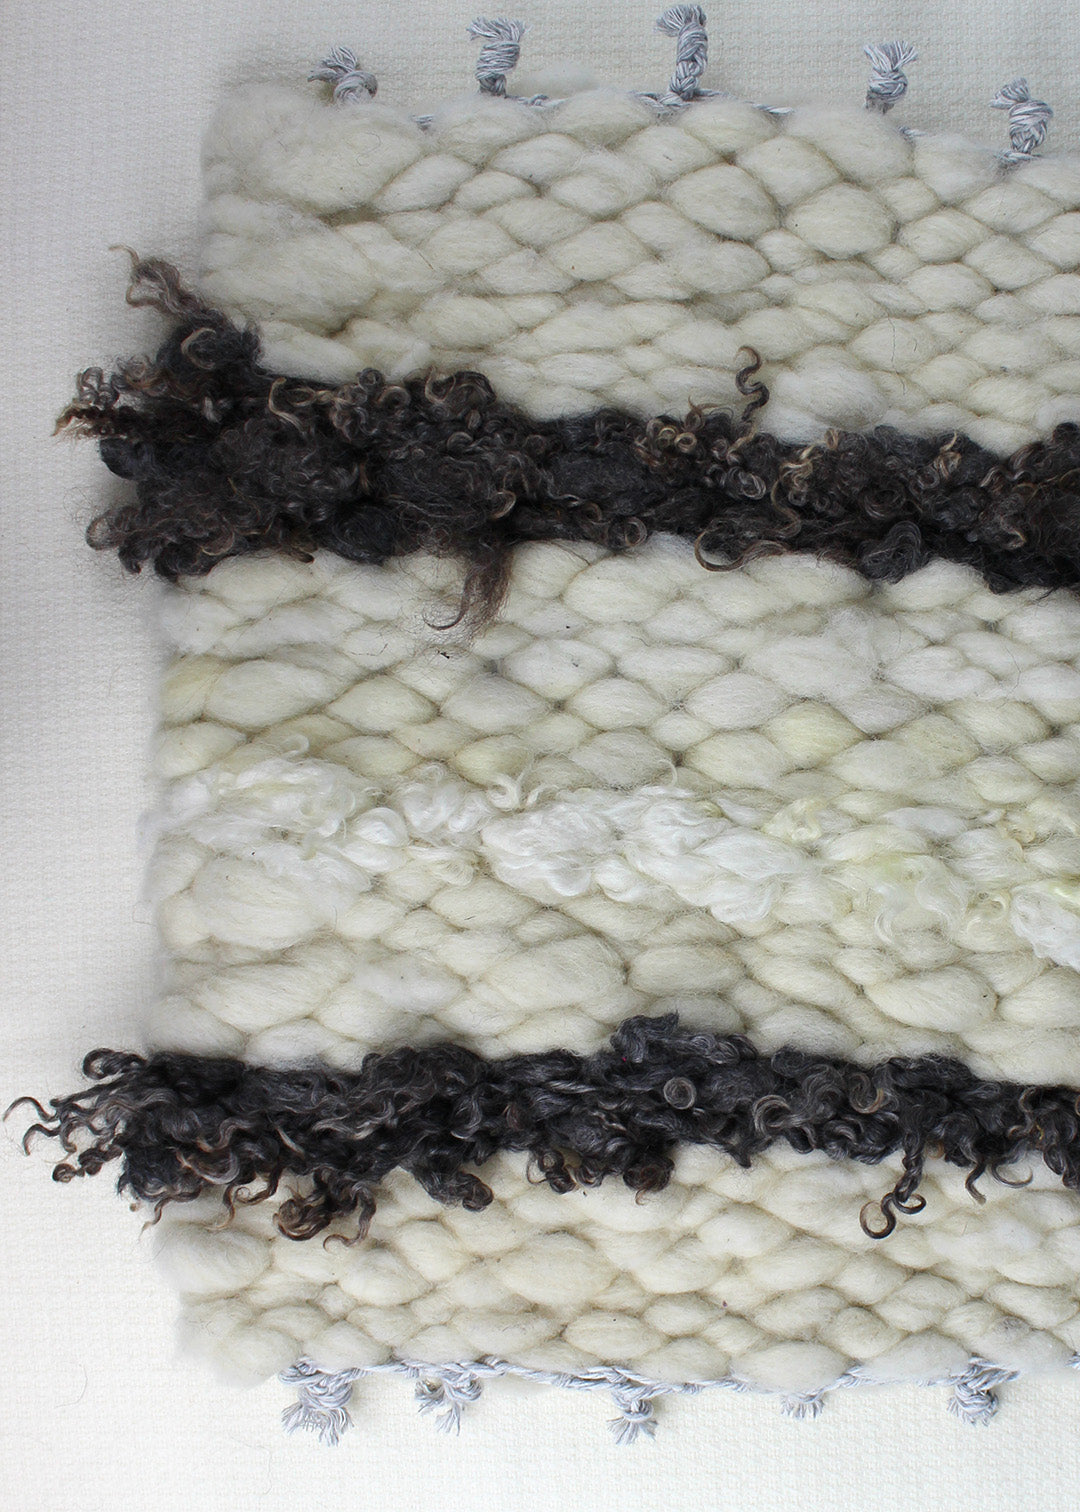 Scottish Blackface & Lincoln Longwool & Teeswater sheep fleece rug.